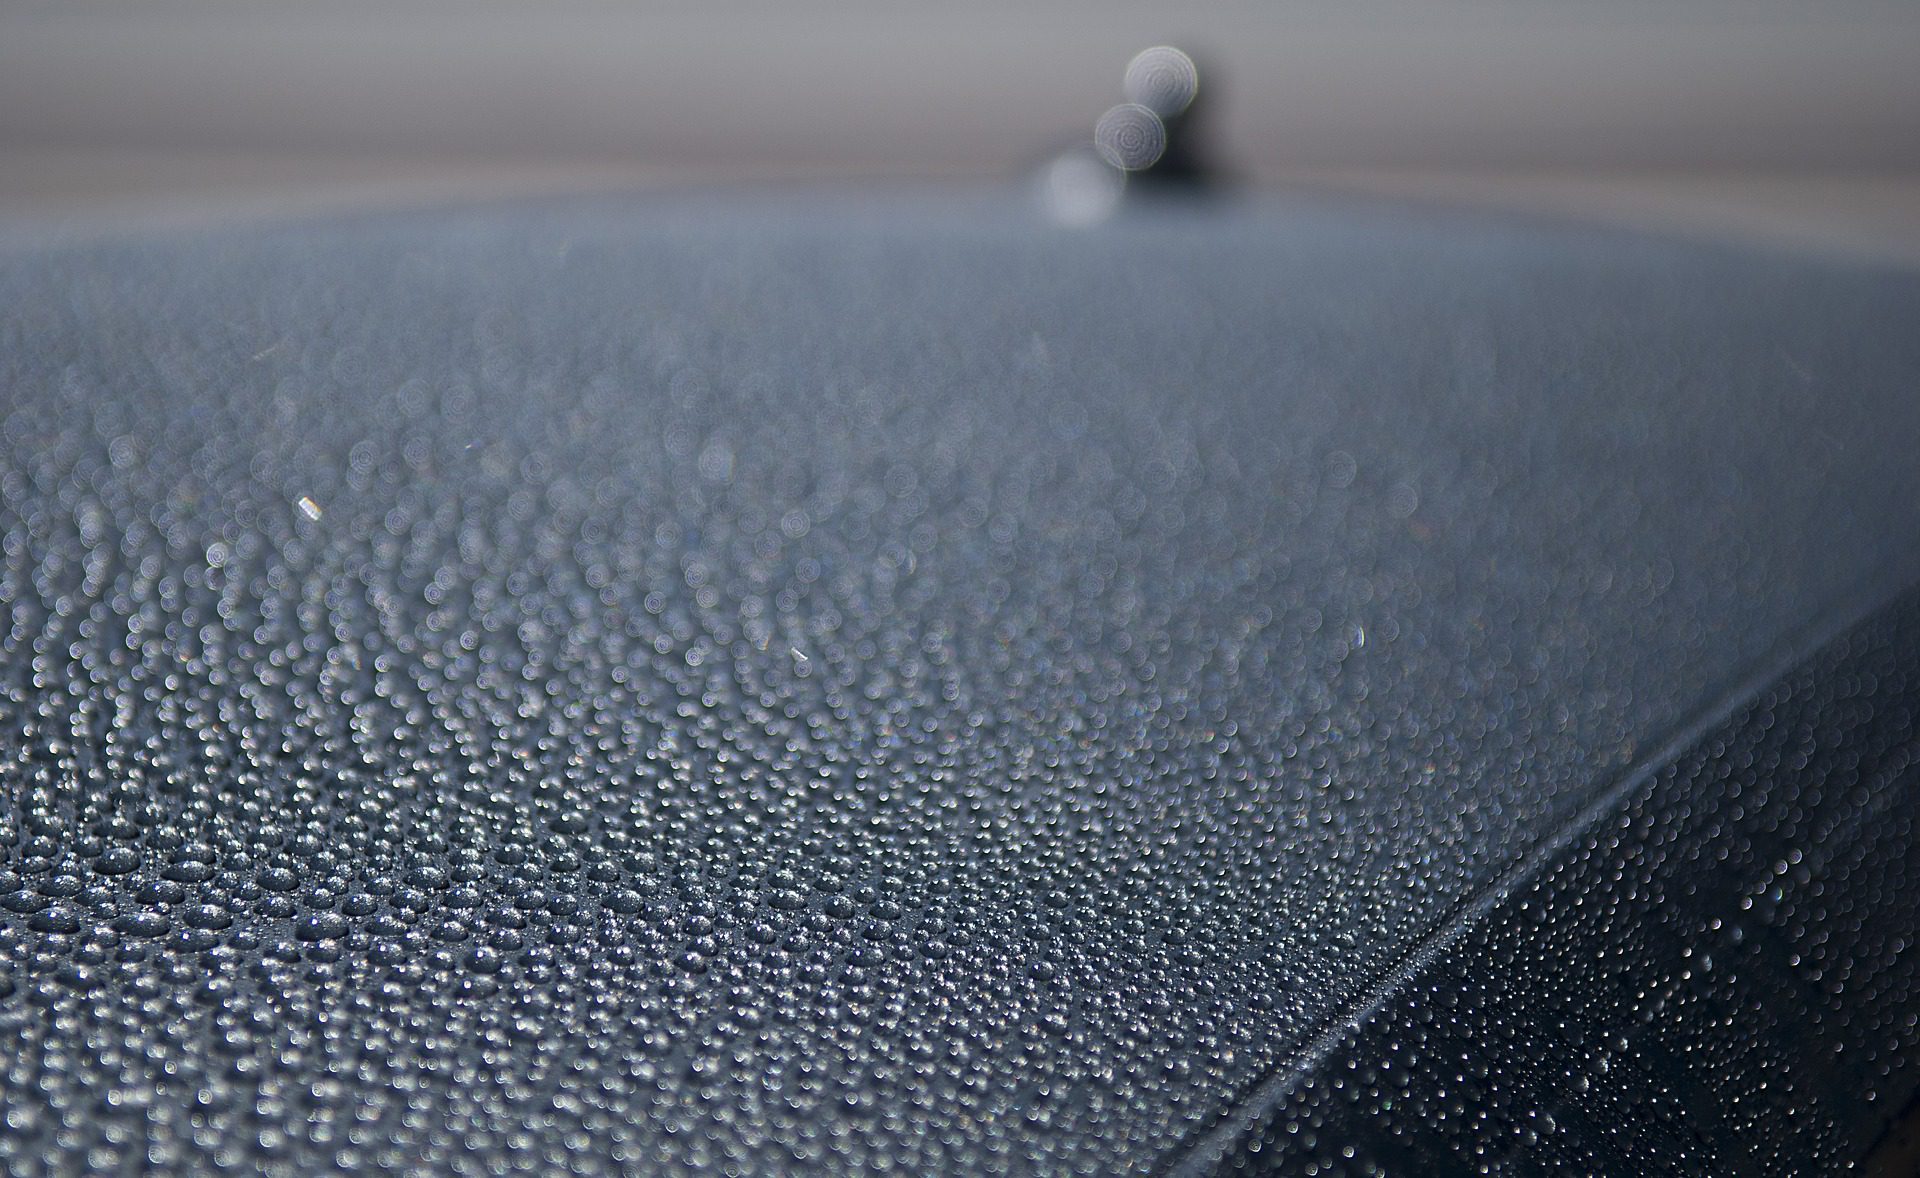 waxed car surface